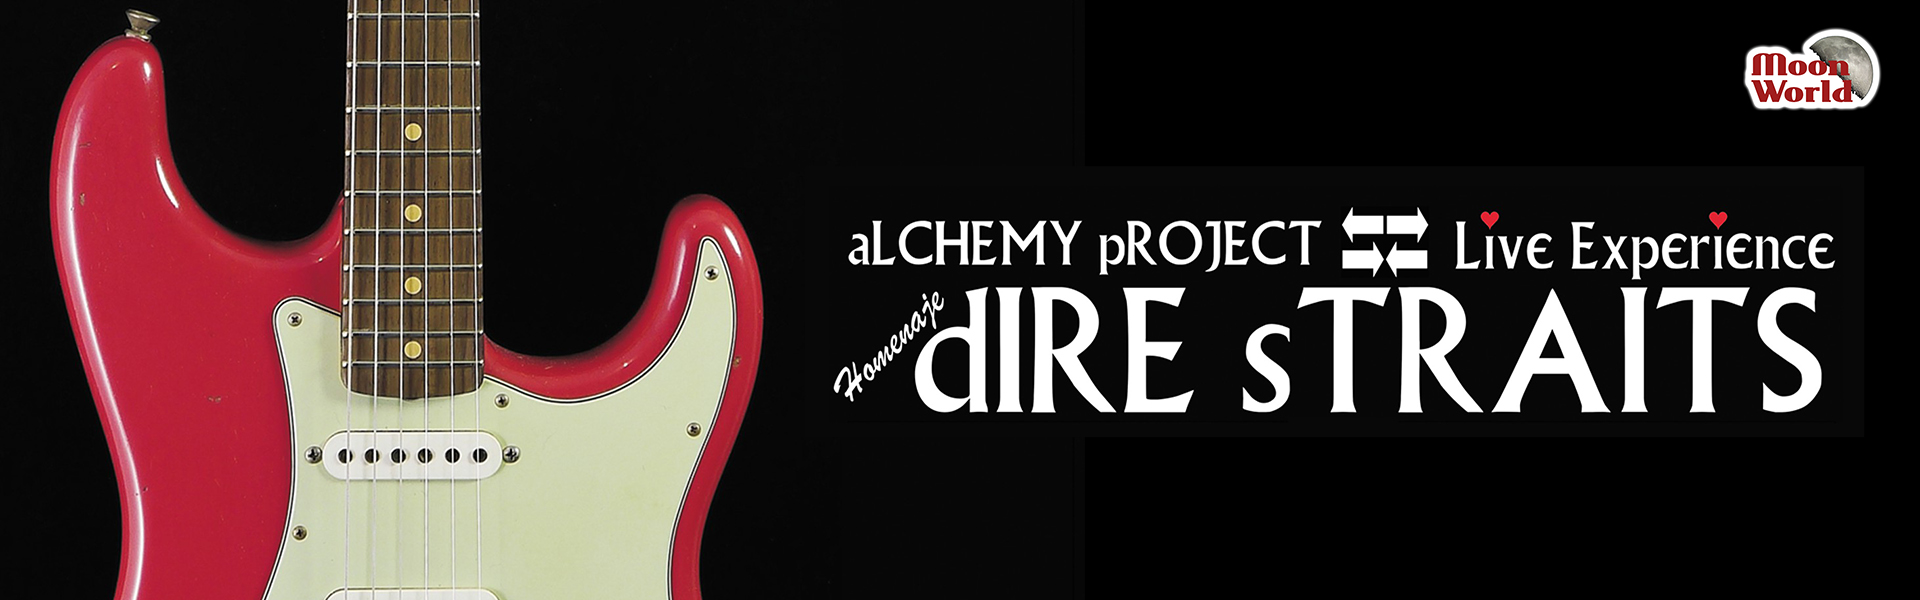 alchemy project